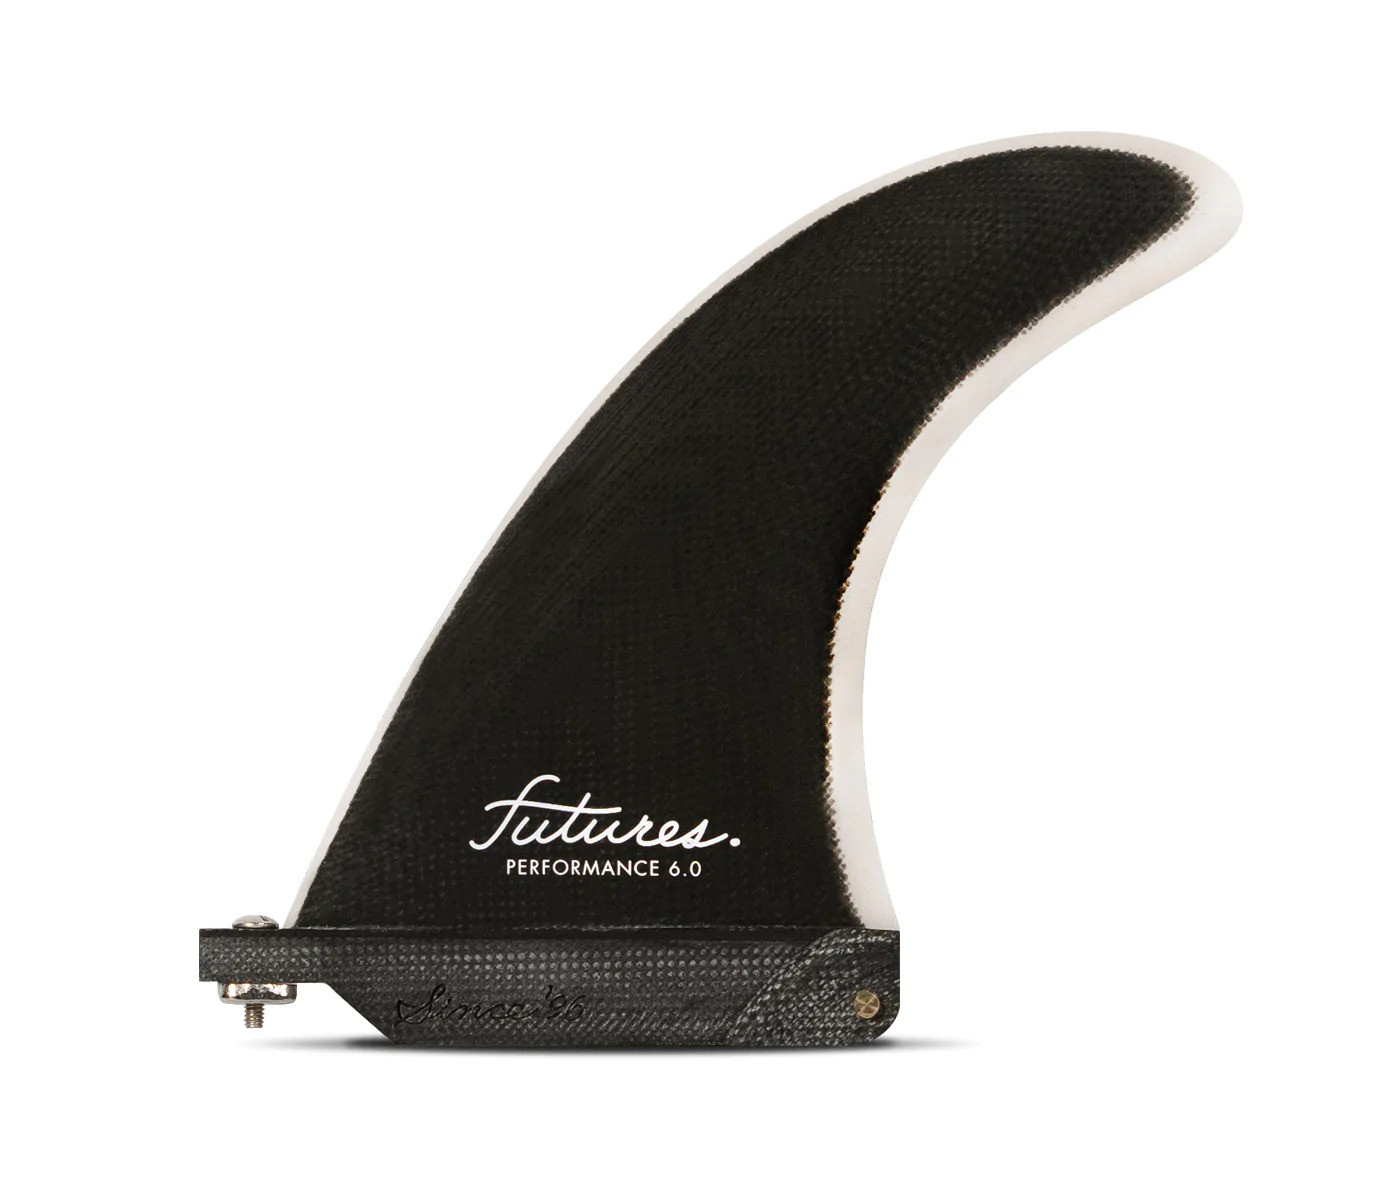 Dérive longboard - Performance Fiberglass solid Black / Grey 6", FUTURES.